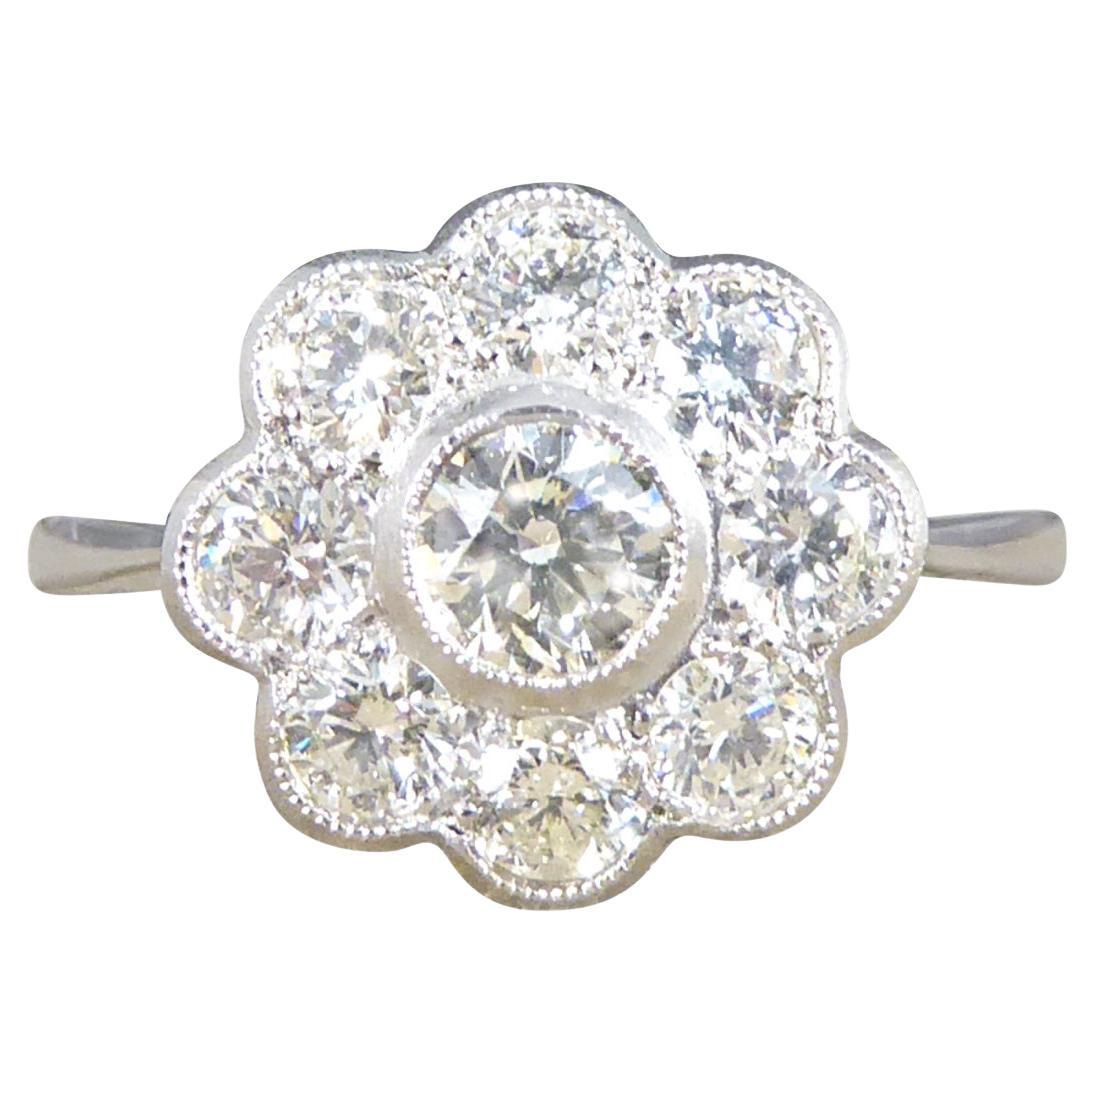 Contemporary 1.00ct Brilliant Cut Diamond Set Daisy Cluster Ring in Platinum